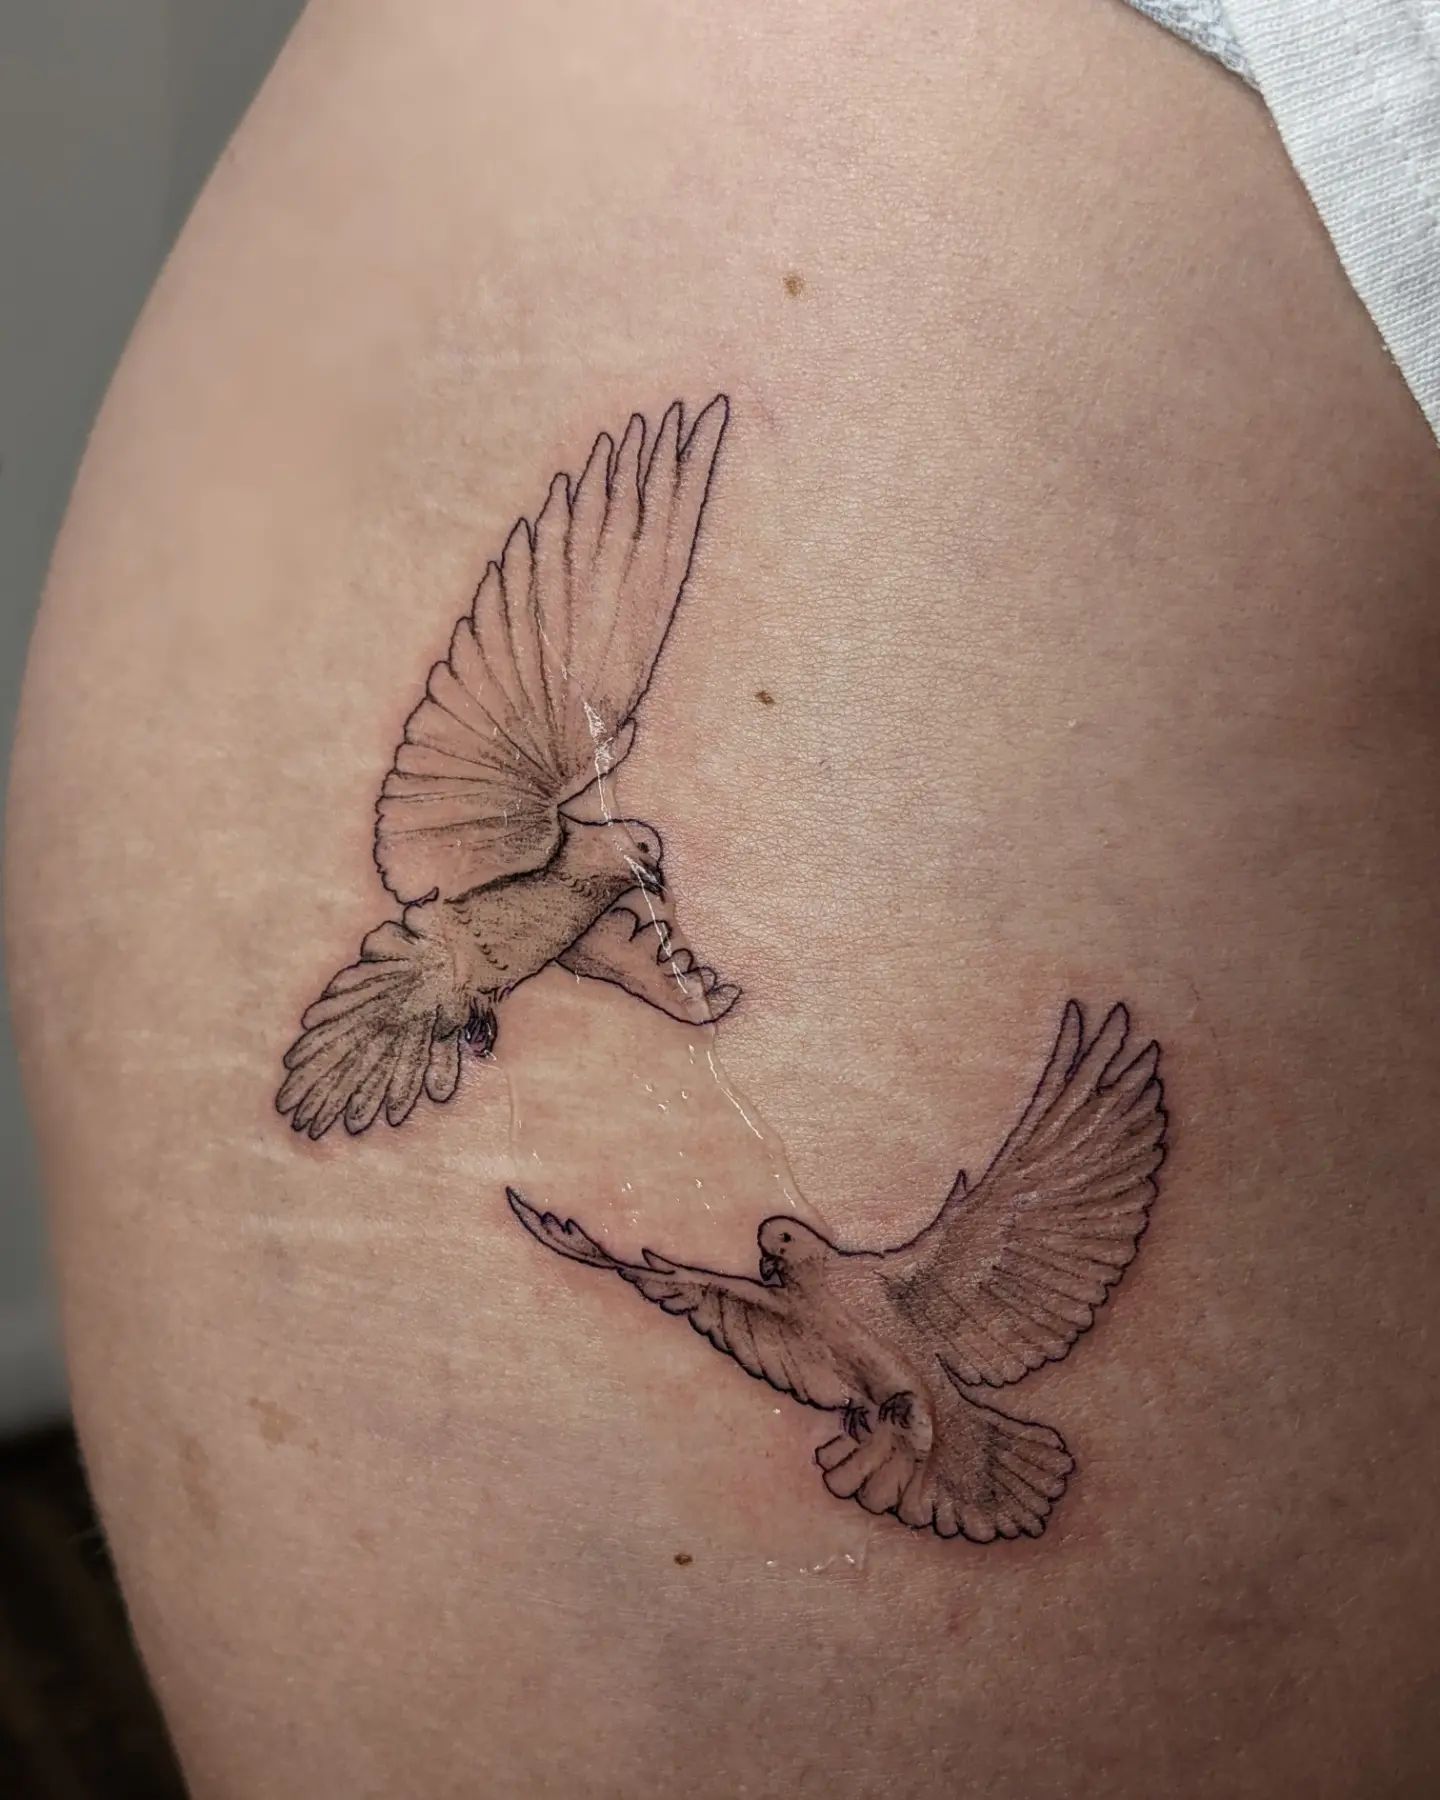 Tatuajes de dos palomas juguetonas.